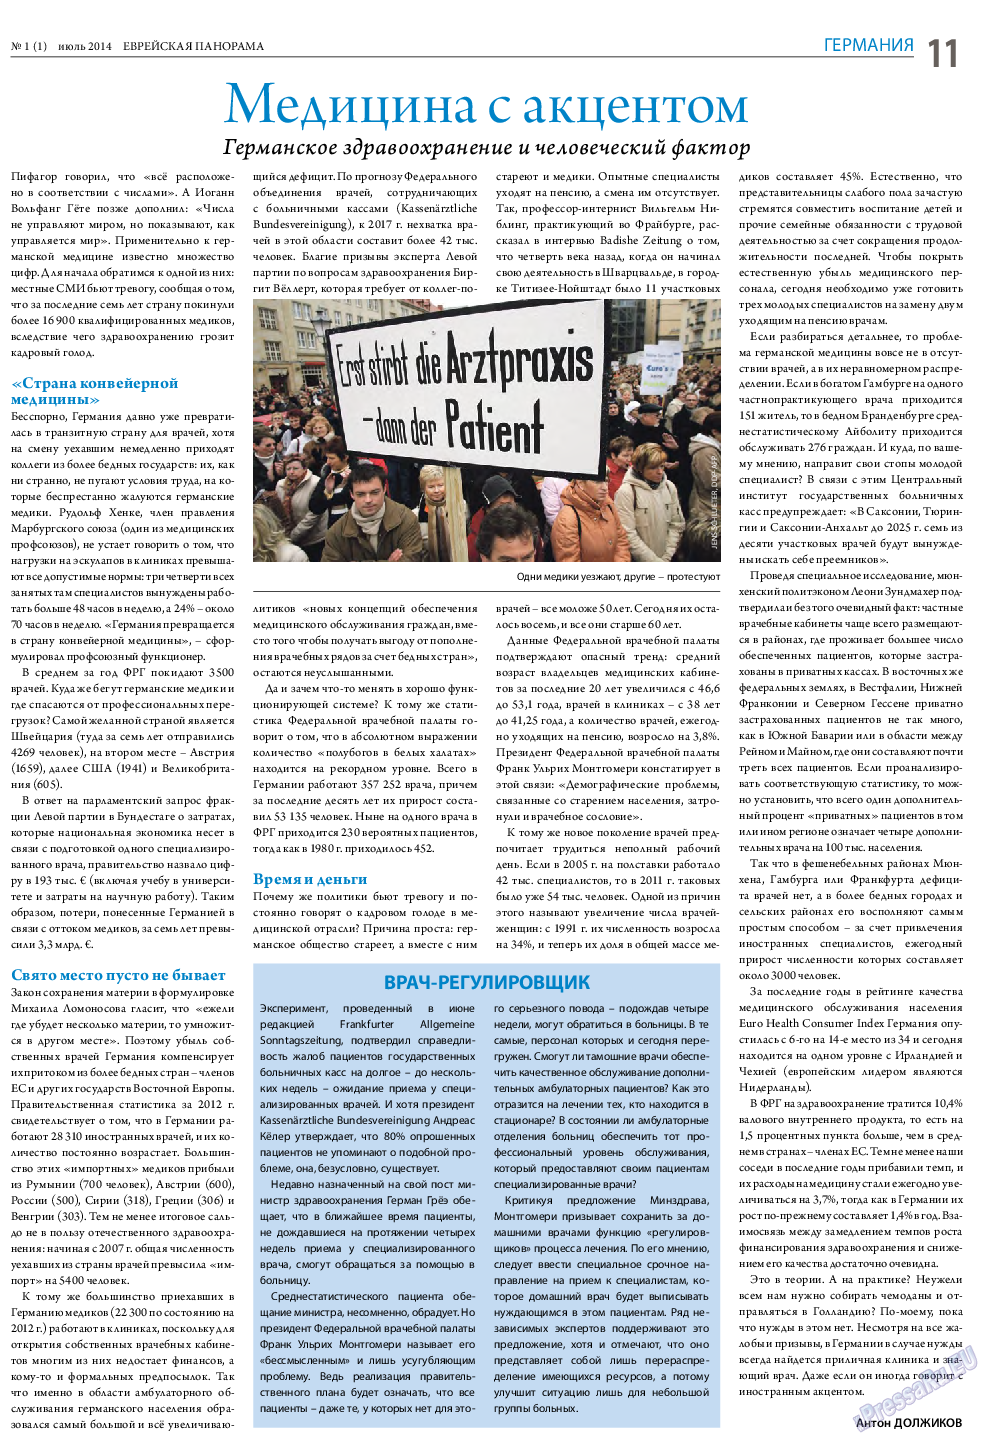 Еврейская панорама, газета. 2014 №1 стр.11